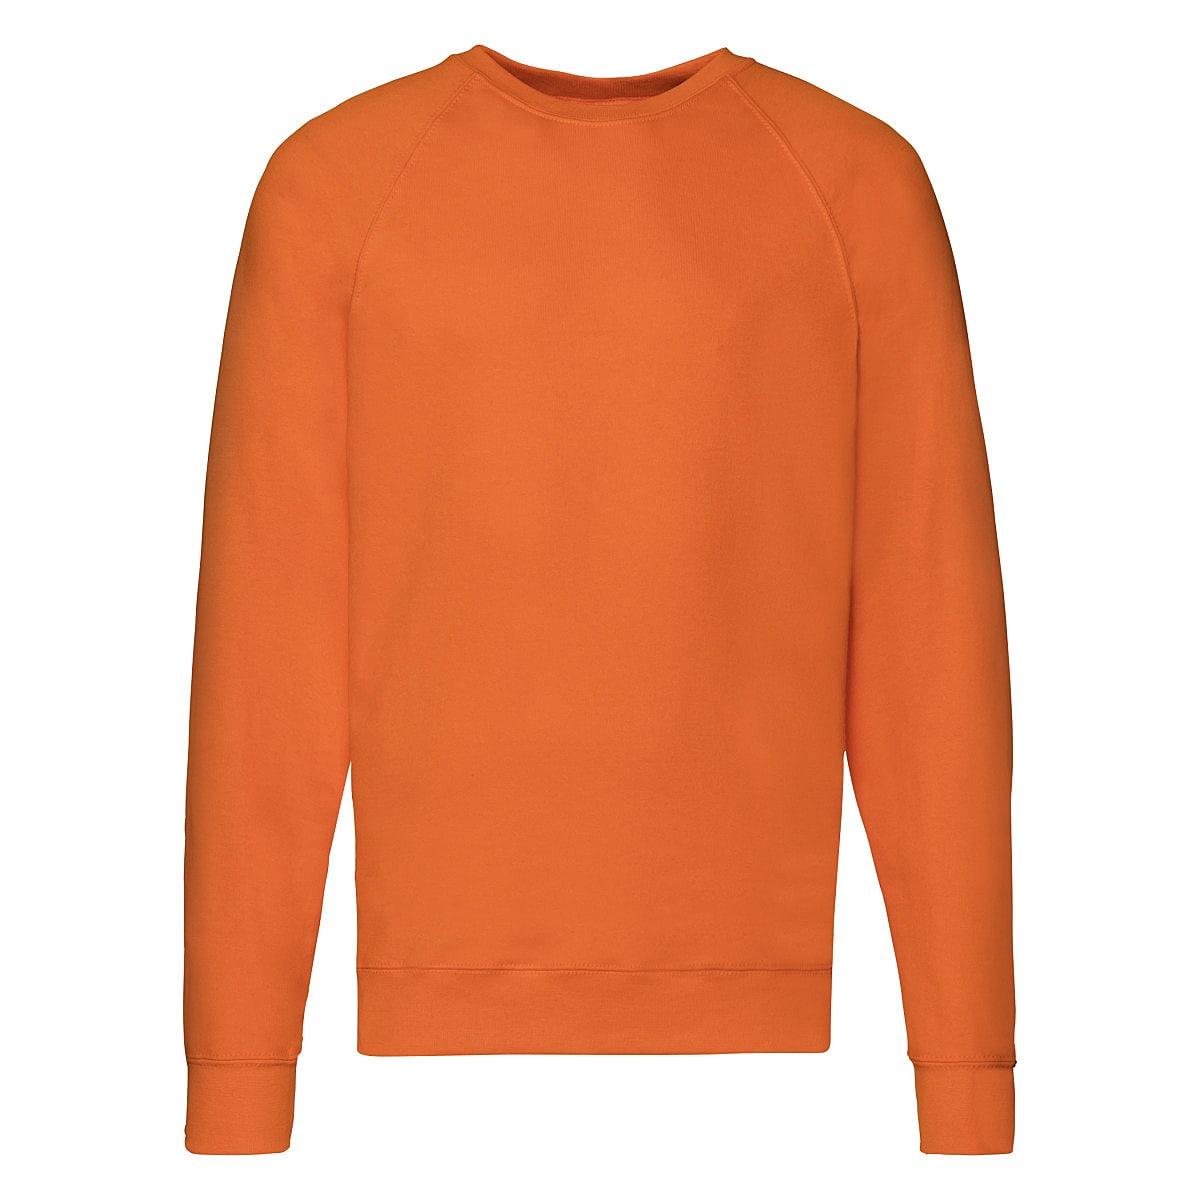 Fruit Of The Loom Mens Lightweight Raglan Sweater in Orange (Product Code: 62138)